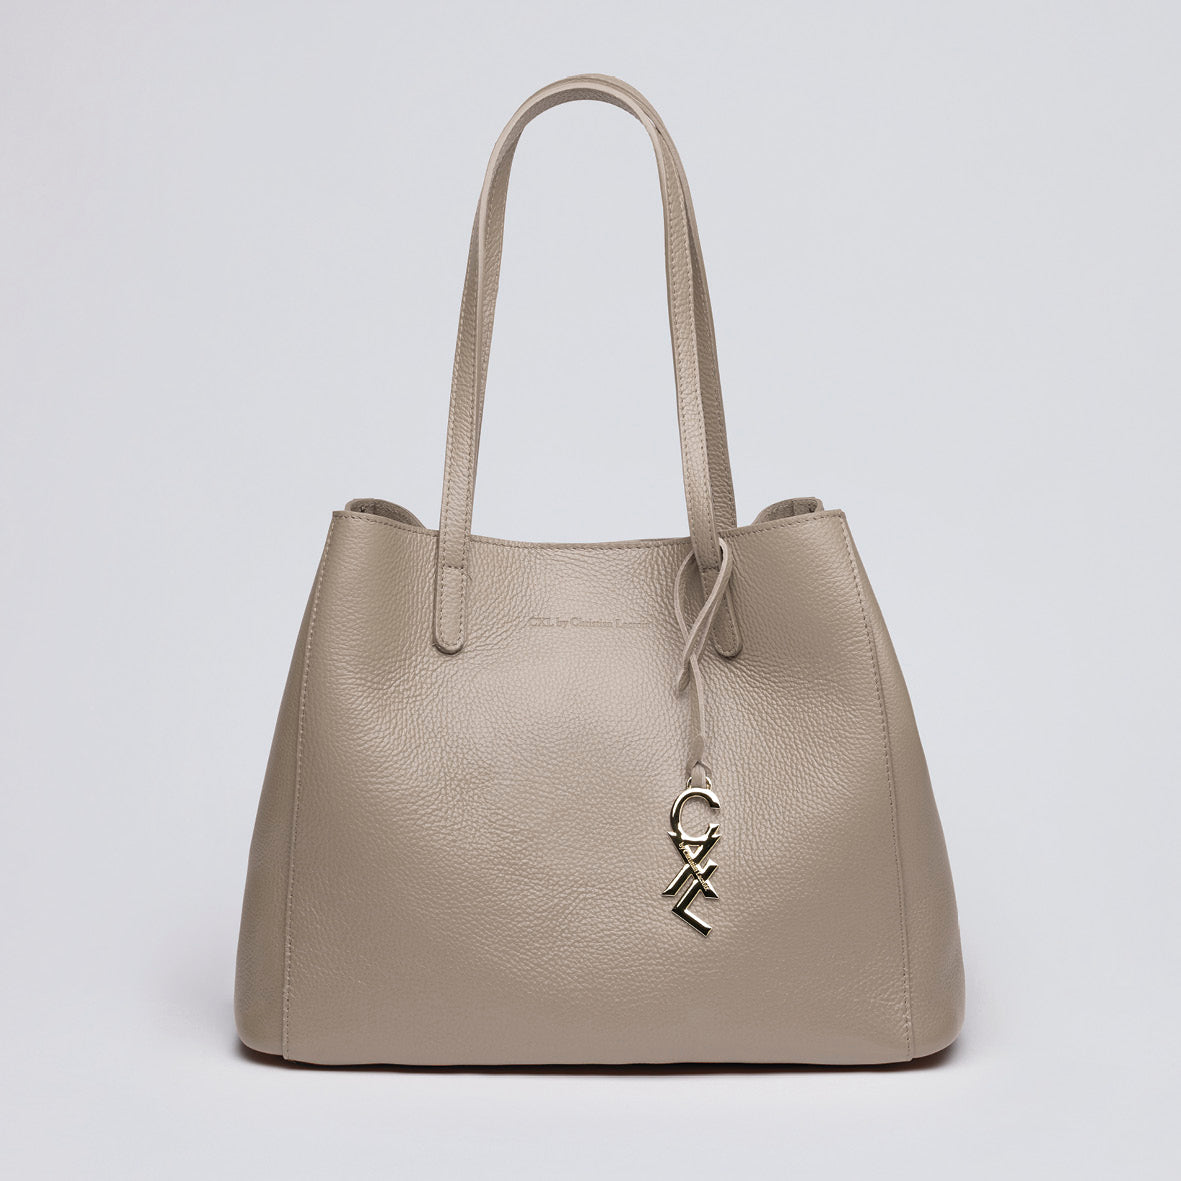 Leather handbag - Alesia